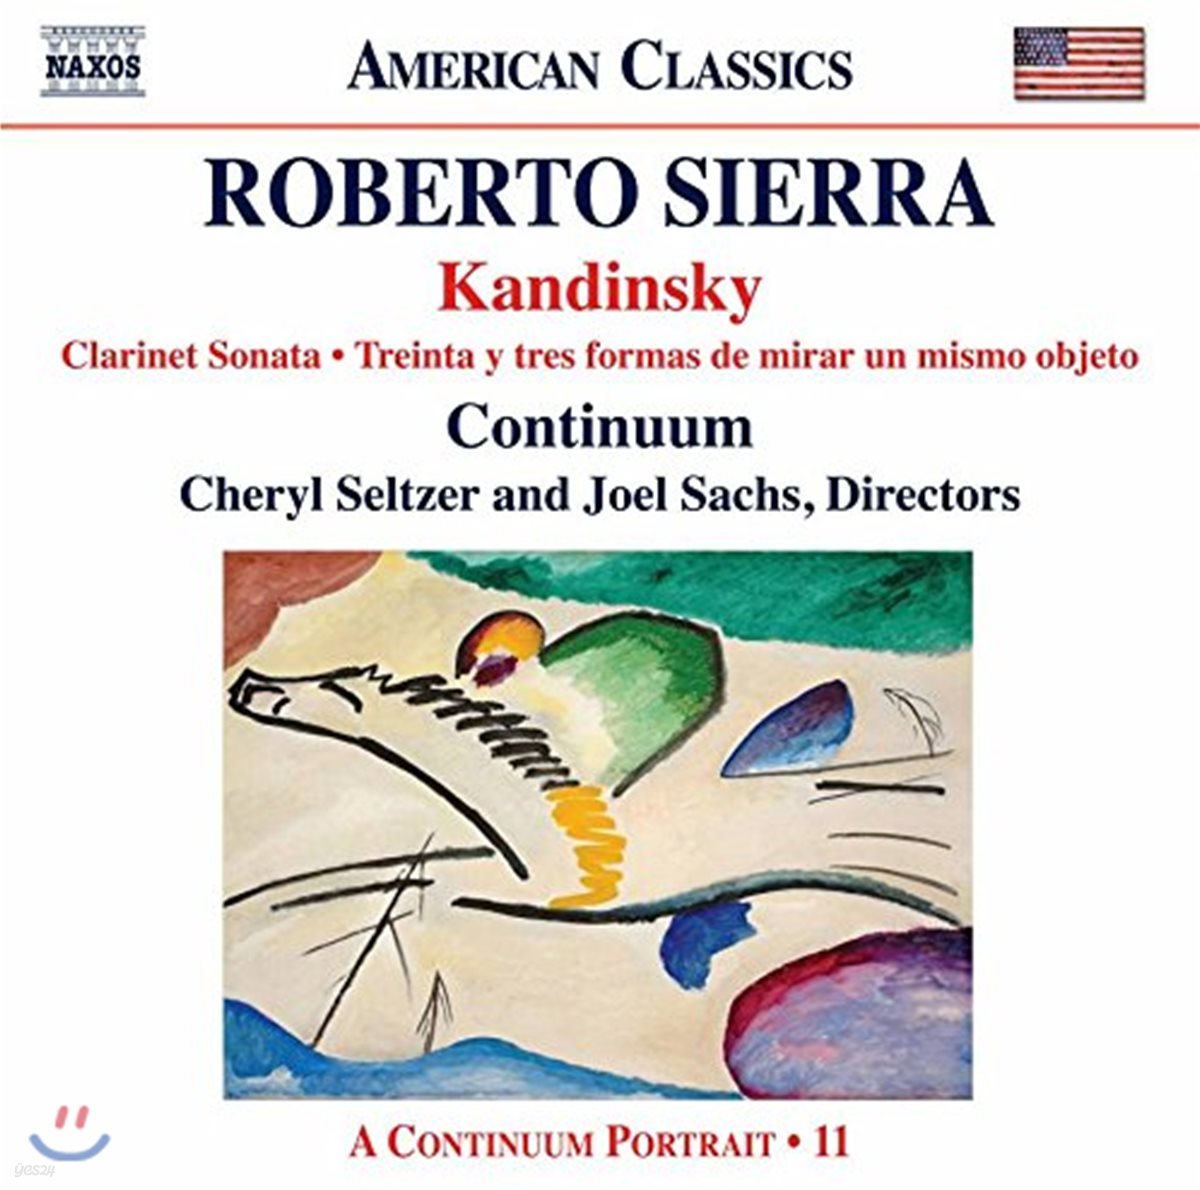 Continuum 로베르토 시에라: 실내악 작품집 - 칸딘스키, 클라리넷 소나타 외 (Roberto Sierra: Kandinsky, Clarinet Sonata)